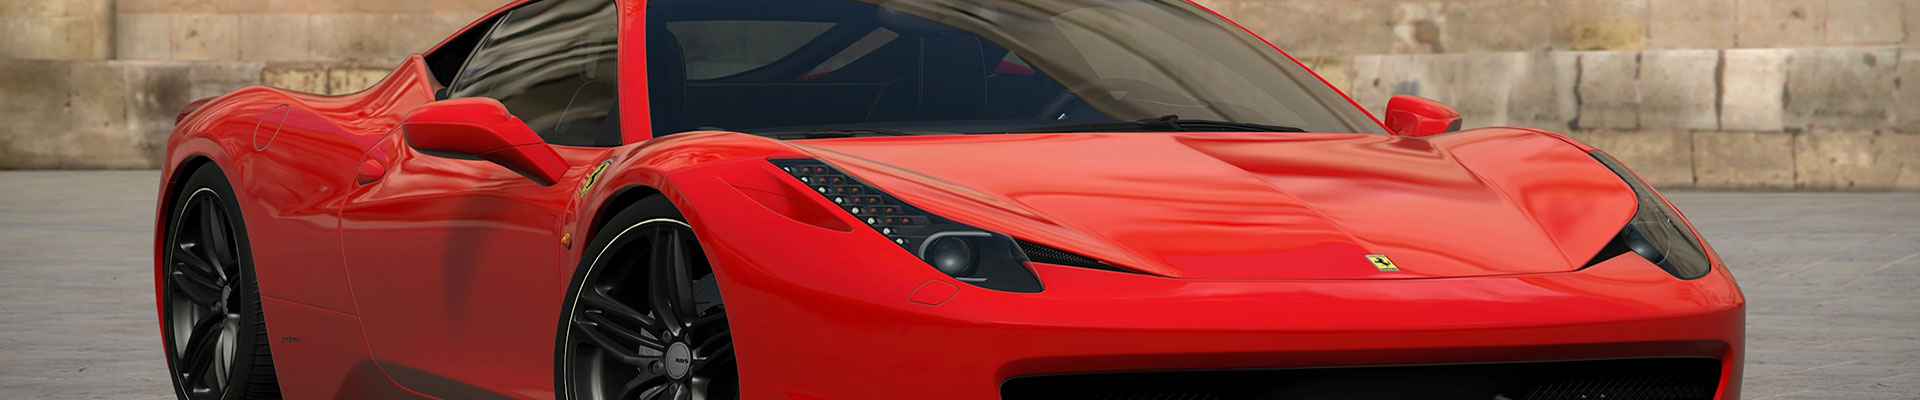 Ferrari 458 autoverzekering